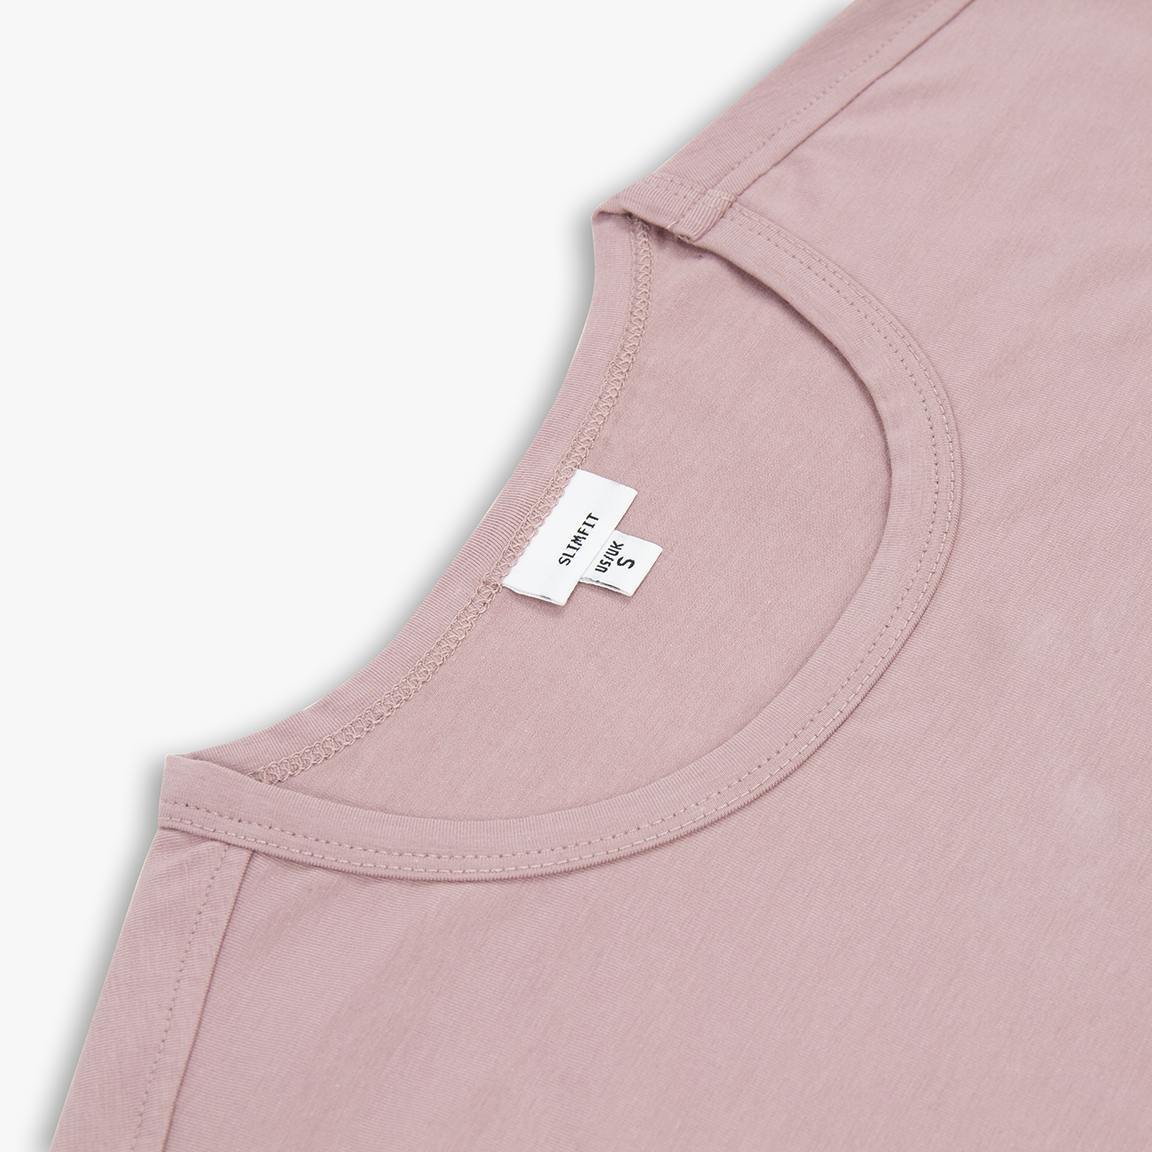 Áo thun cổ tròn T-shirt nam TS054 vải Cotton modal single mềm mại Slimfit form